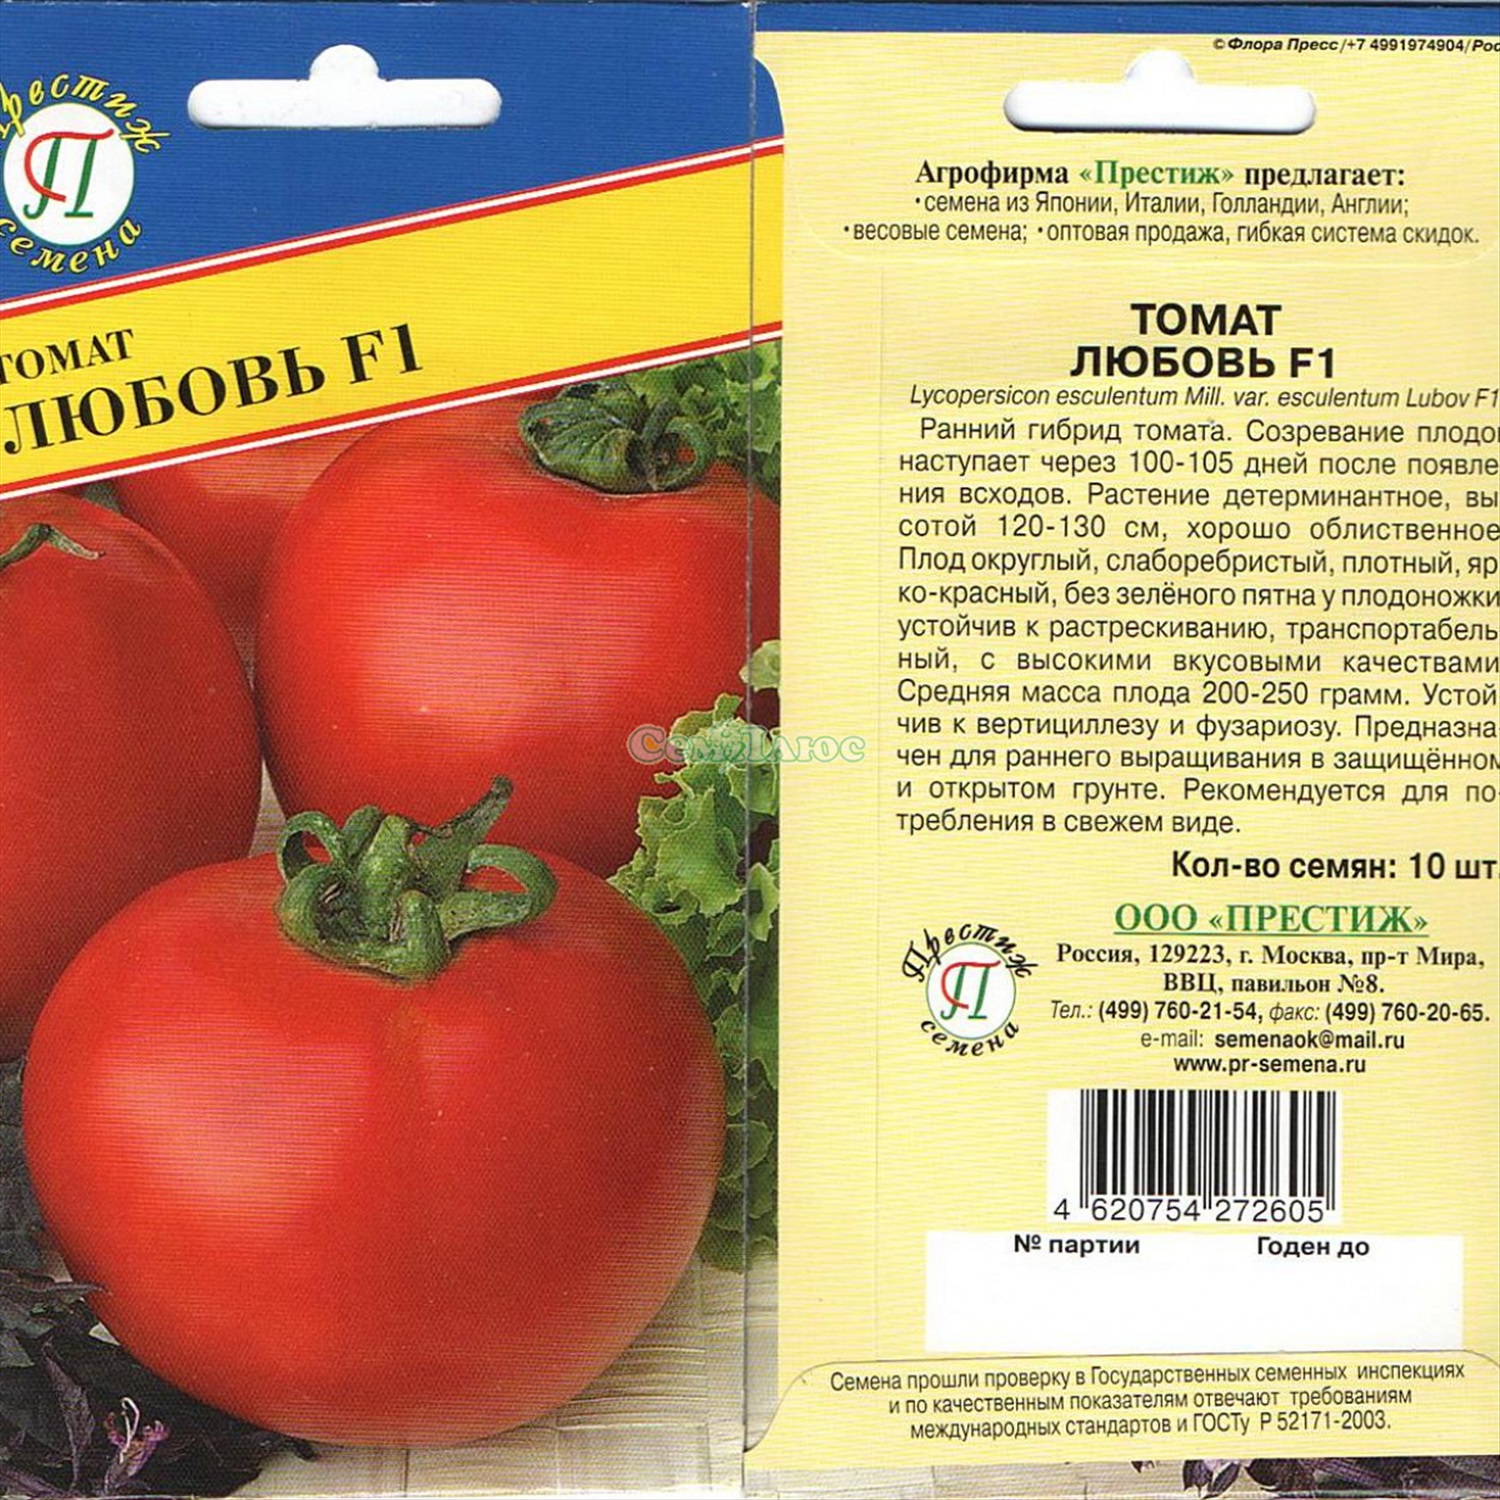 Томат дина: описание и характеристика сорта, отзывы, фото | tomatland.ru